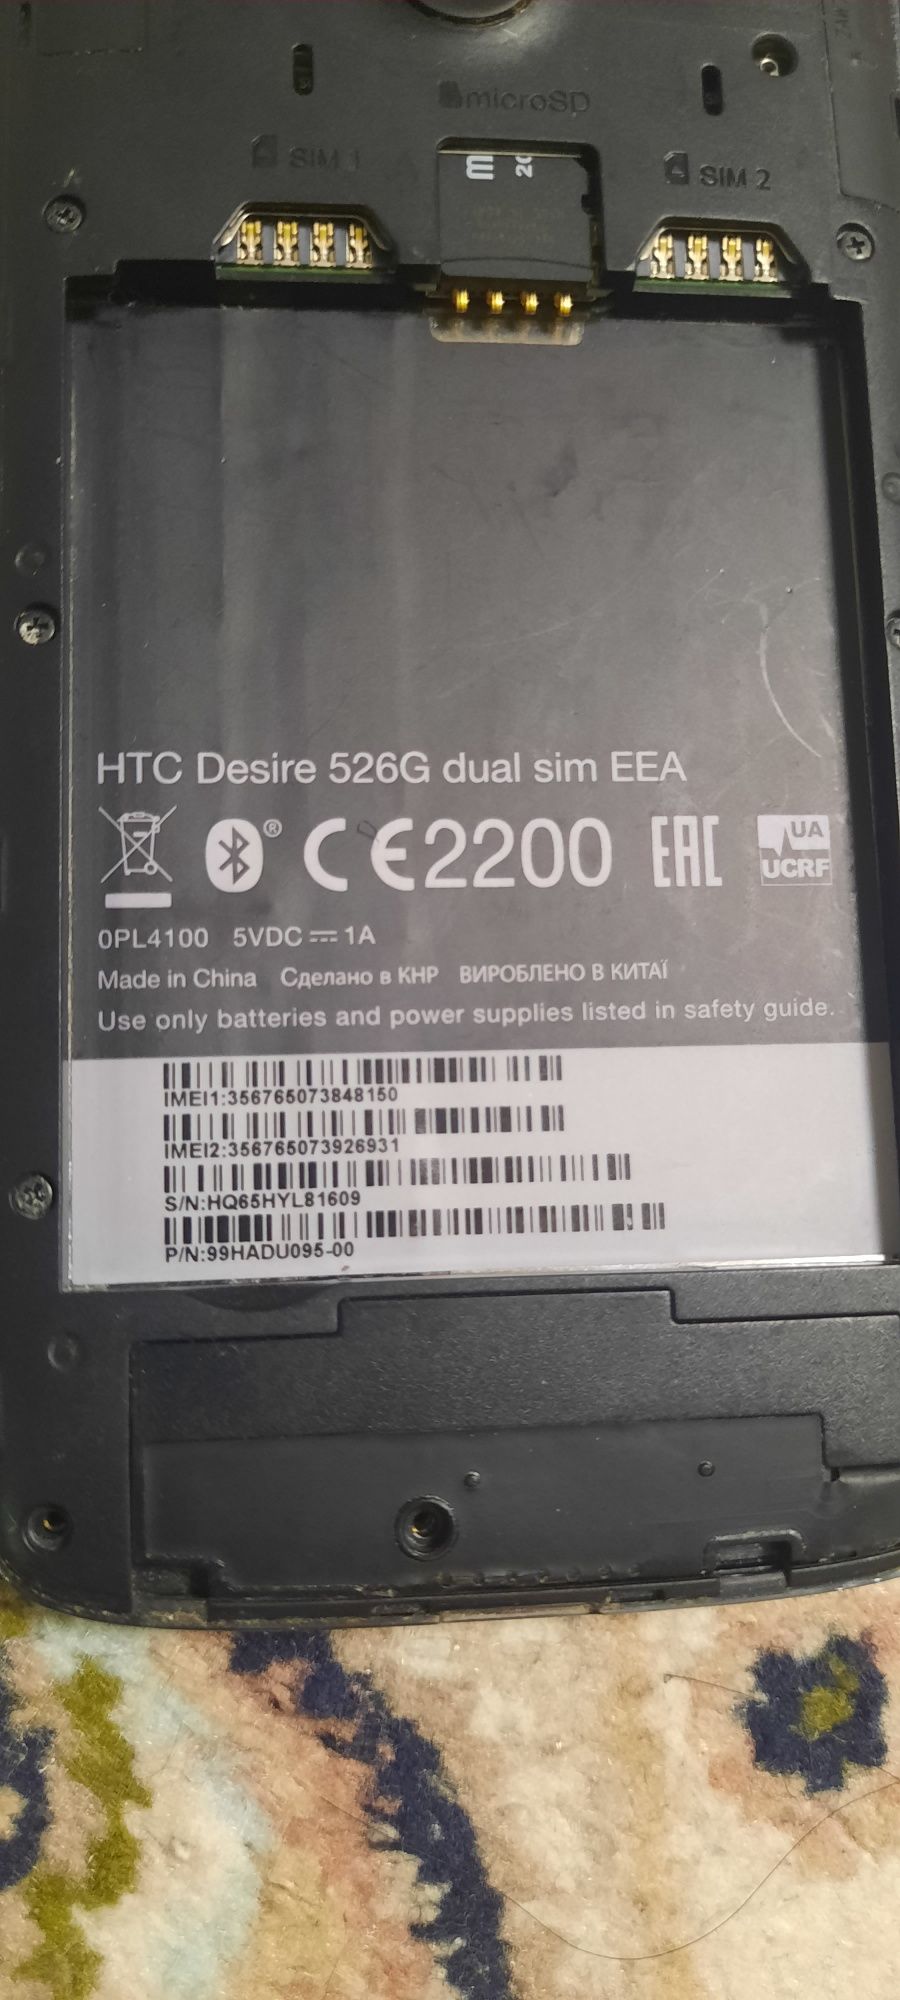 HTC 526G Dual sim